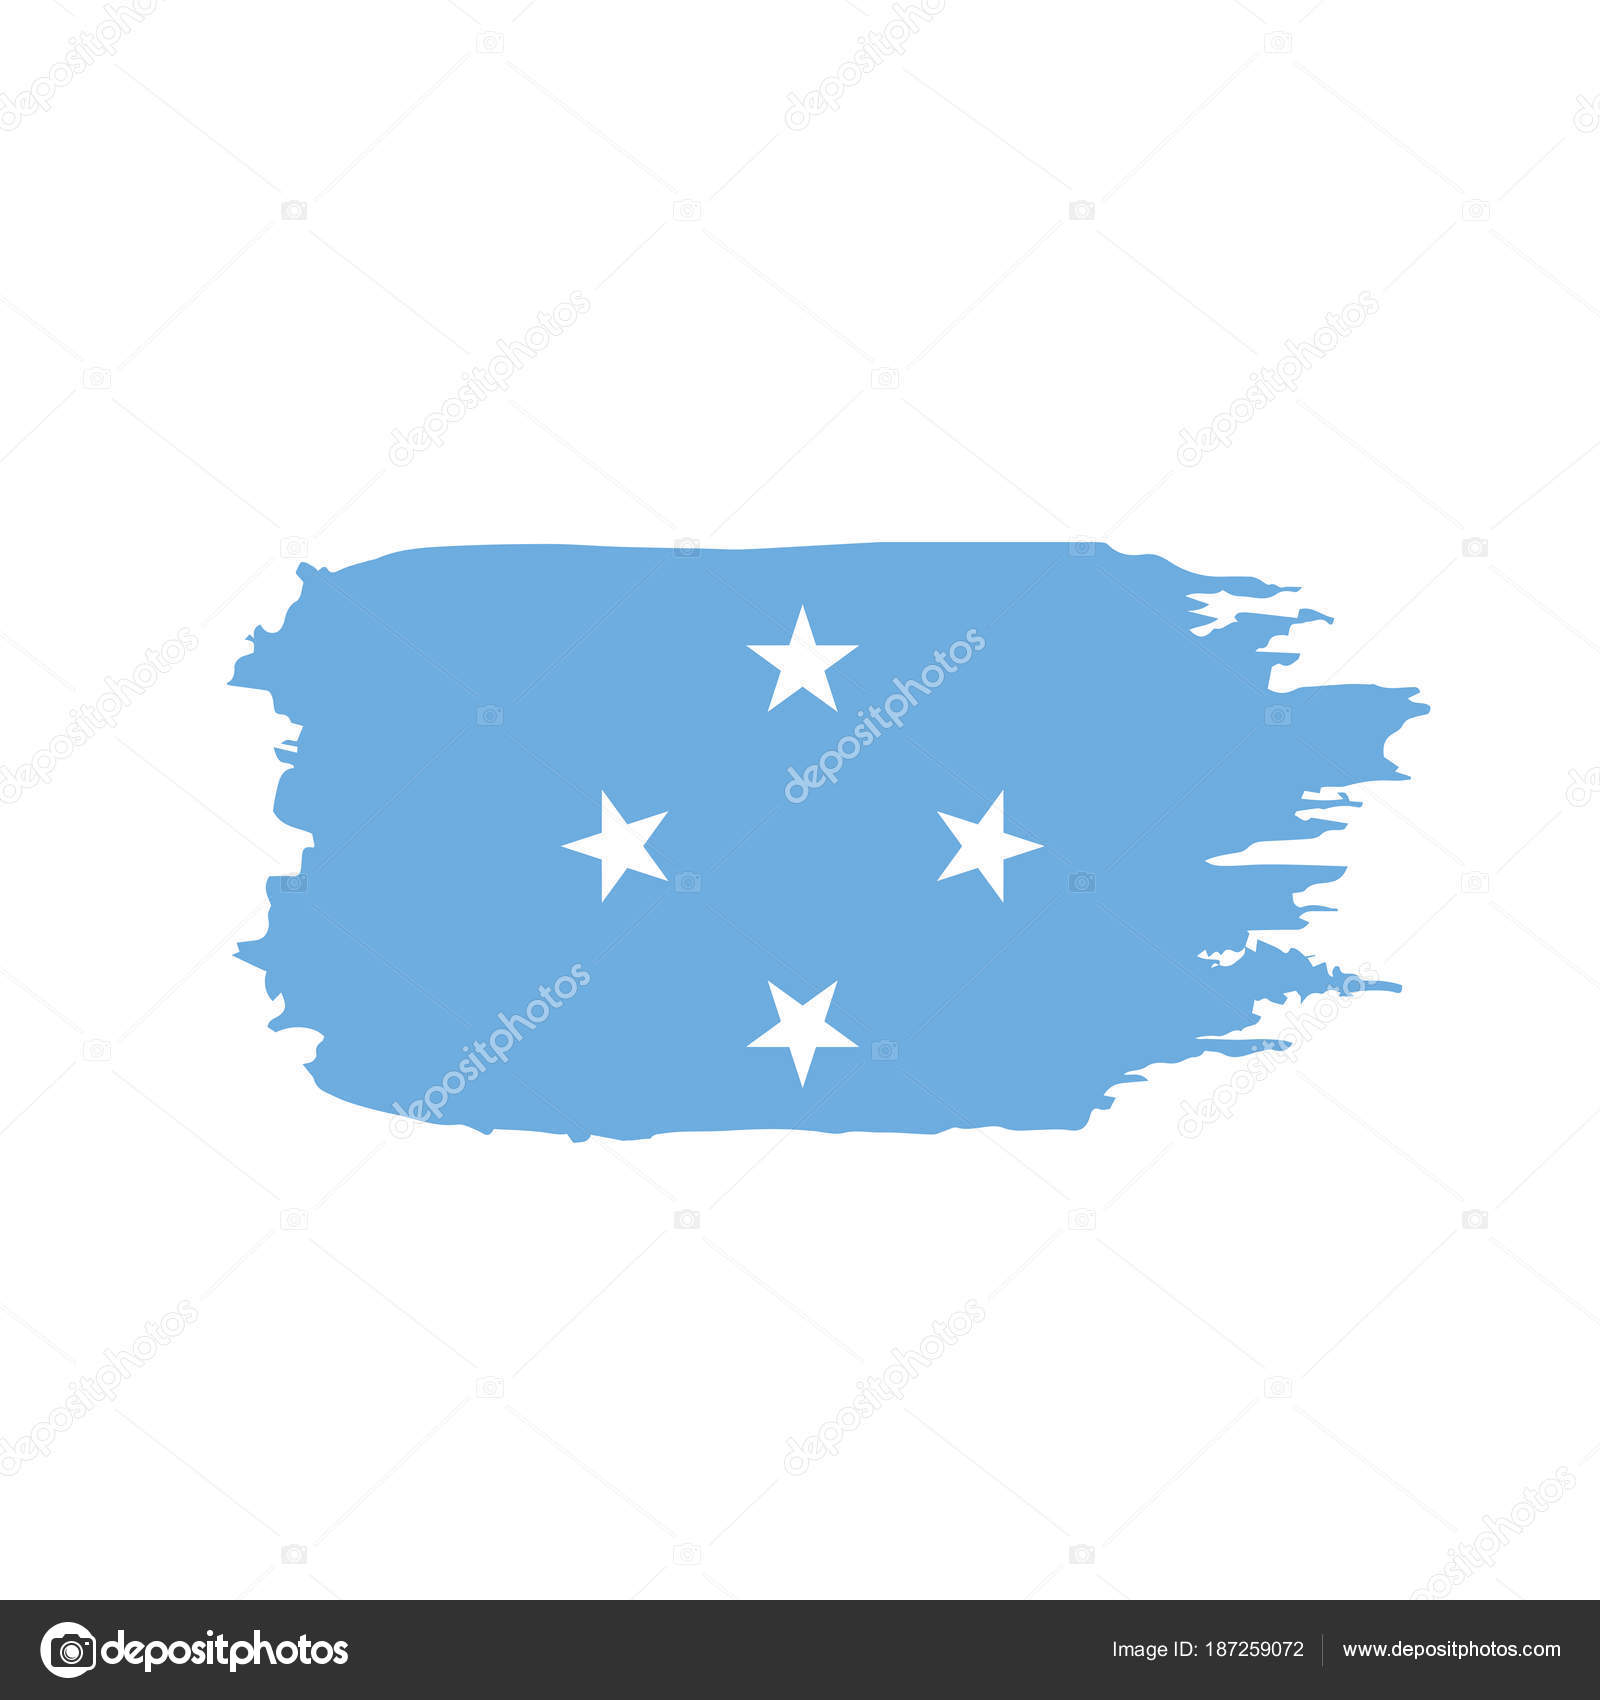 Federated States Micronesia flag — Stock Vector © artbutenkov #187259072